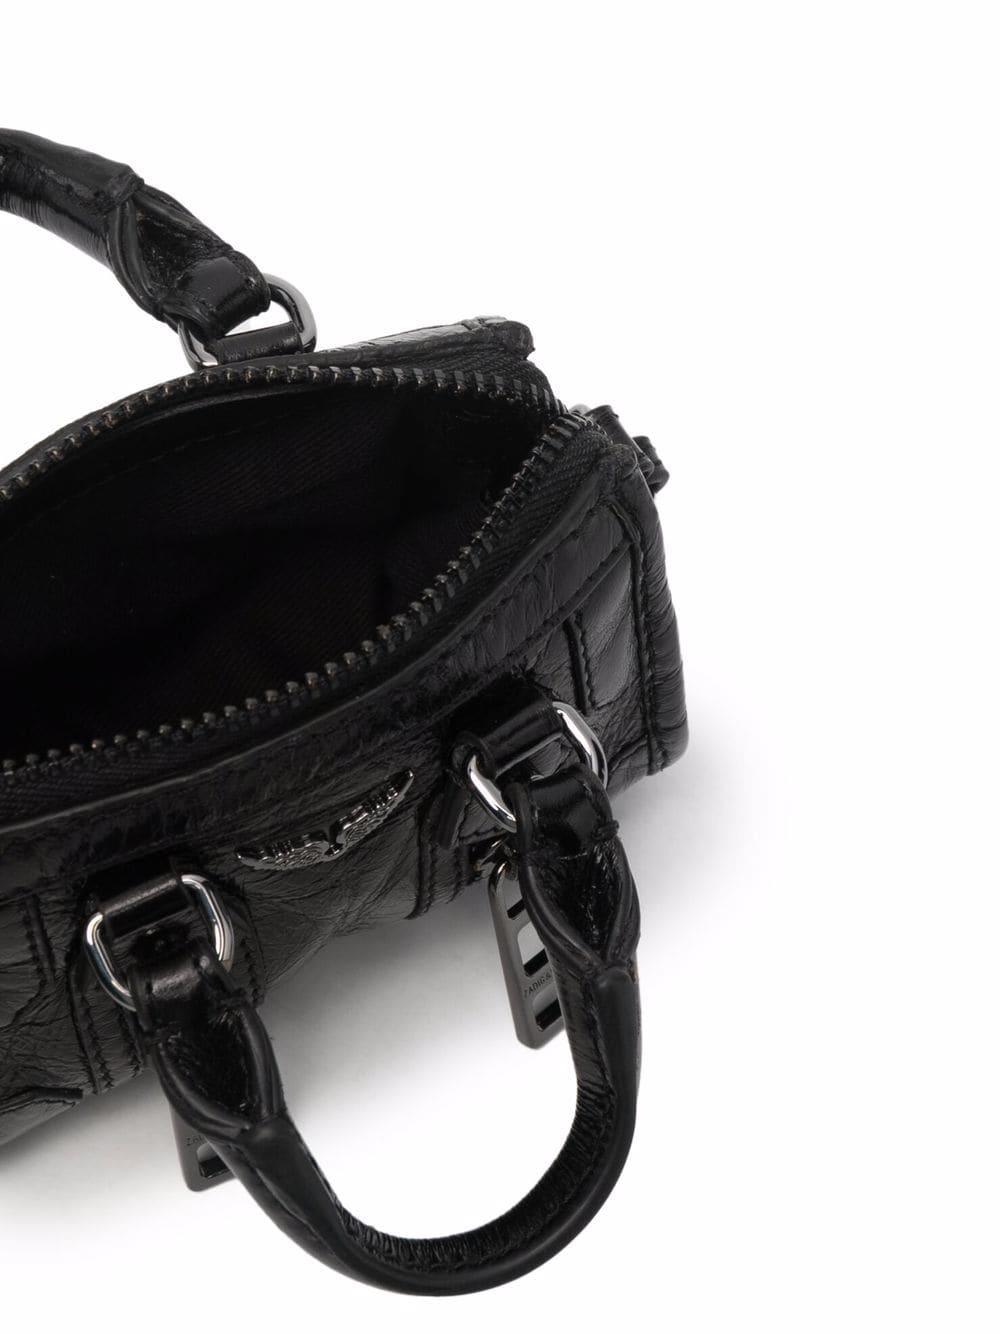 Zadig & Voltaire Sunny Mini Patent Leather Tote in Black | Lyst